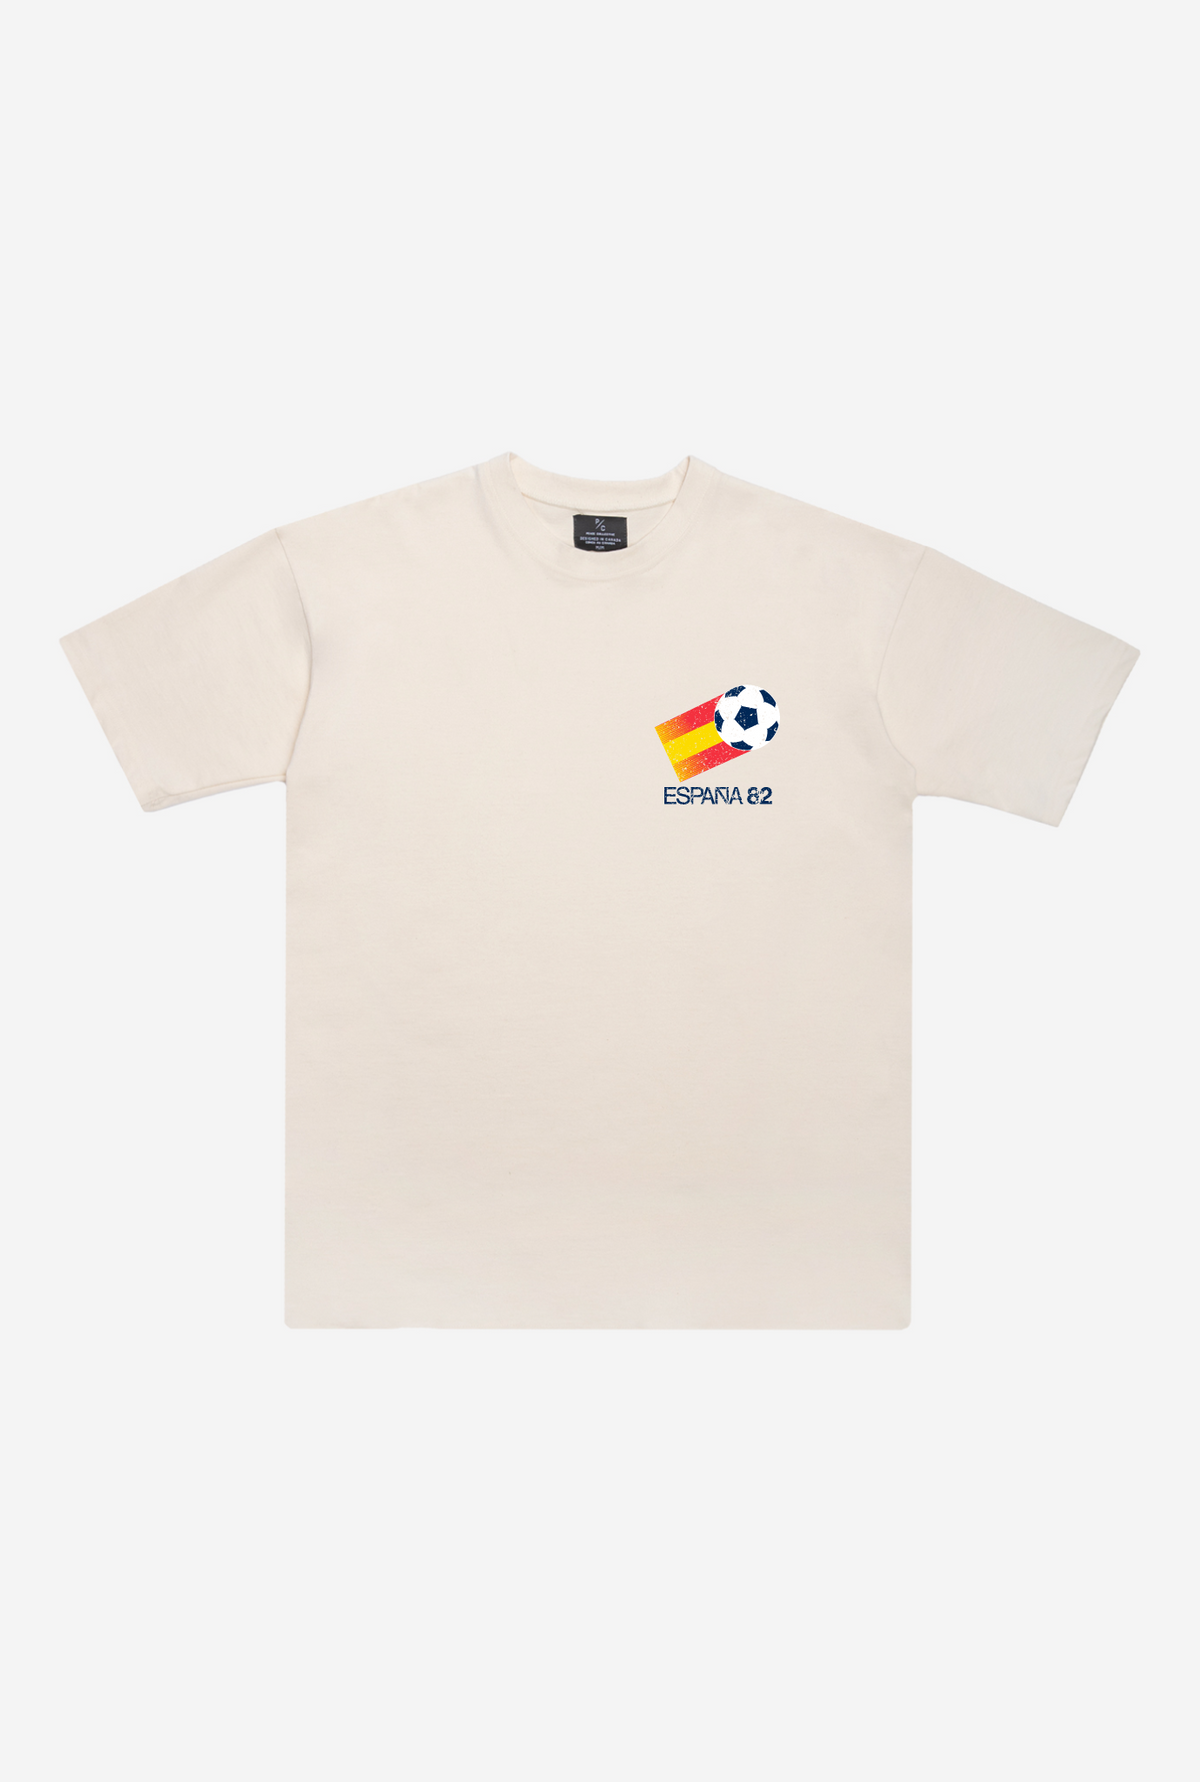 FIFA World Cup Espana 1982 Premium T-Shirt - Ivory